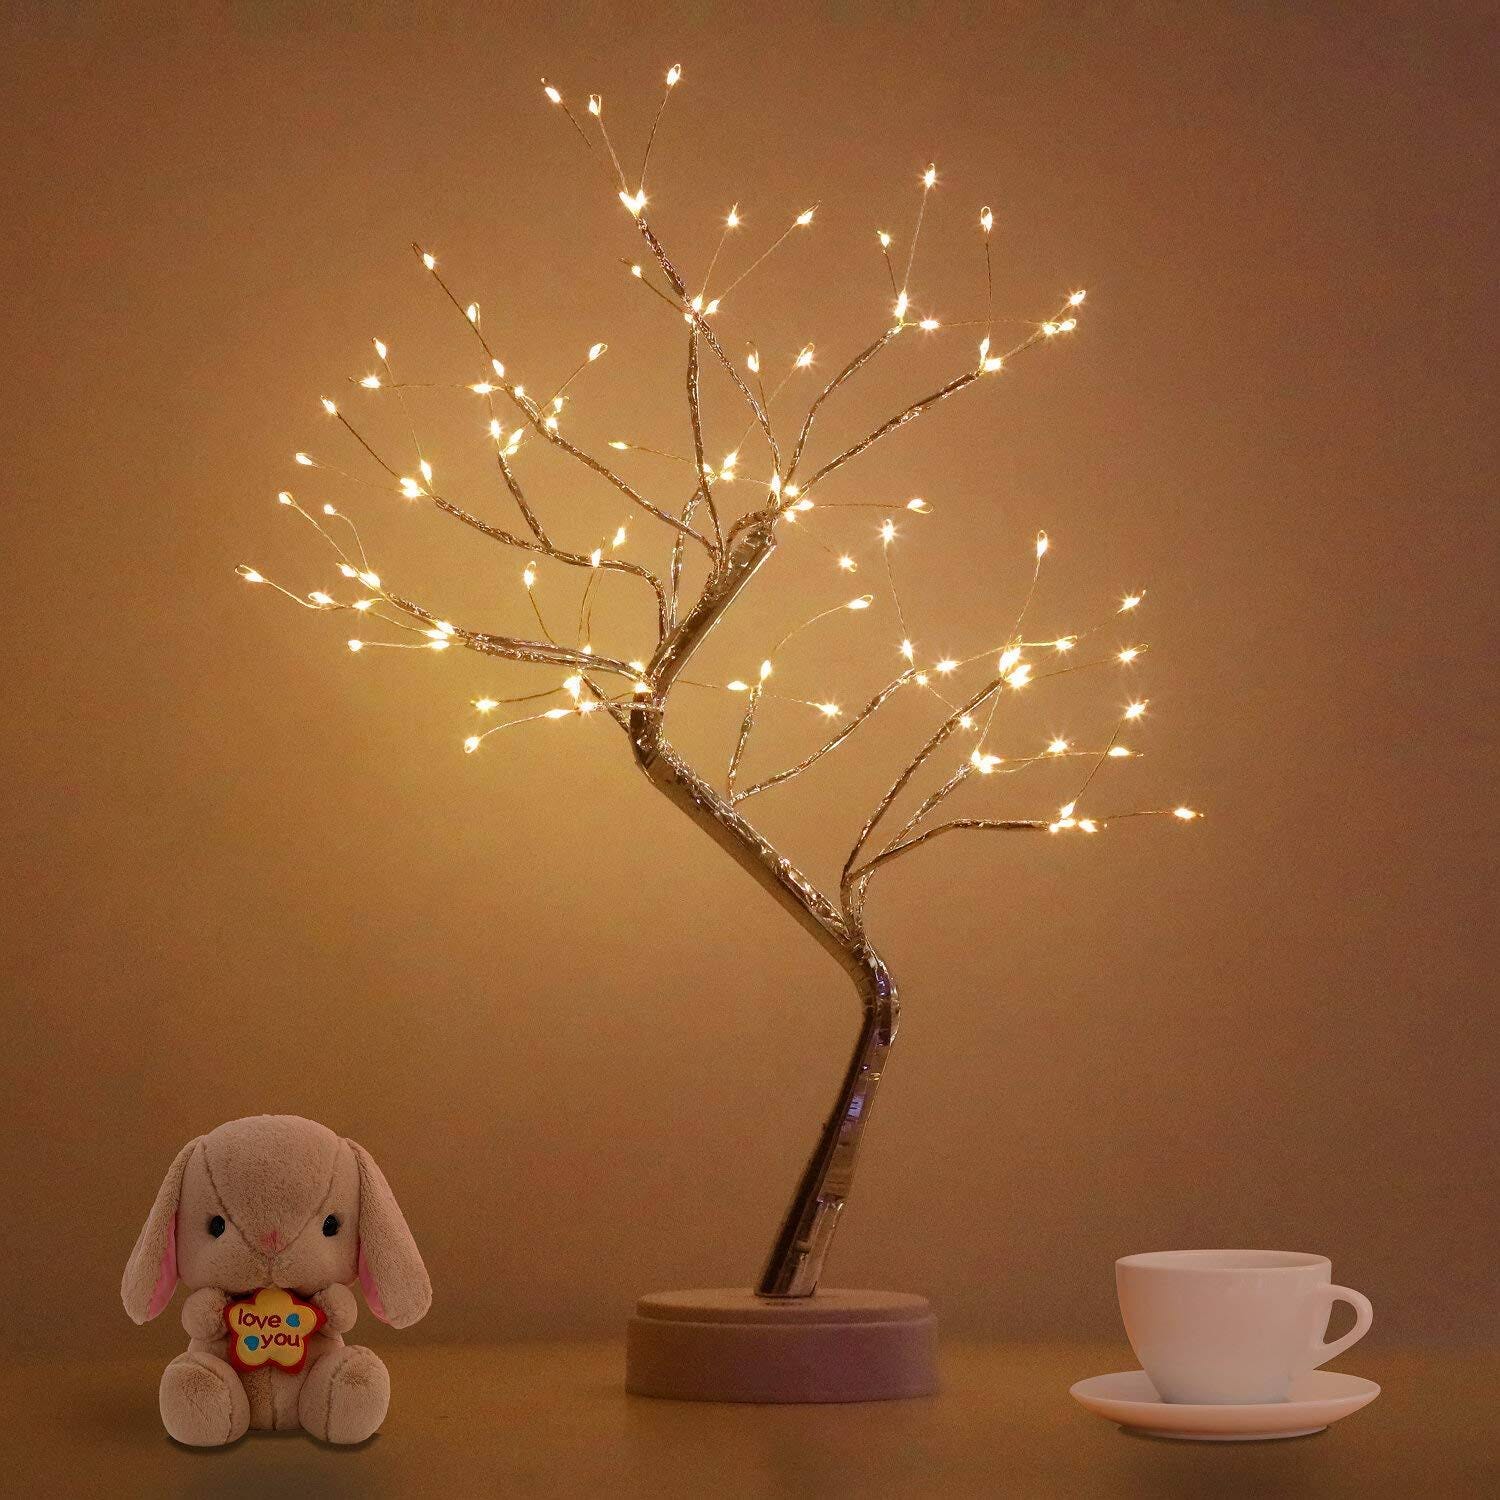 Bonsai Tree Light: Stylish Aesthetic Night Light for Room Decor | Image